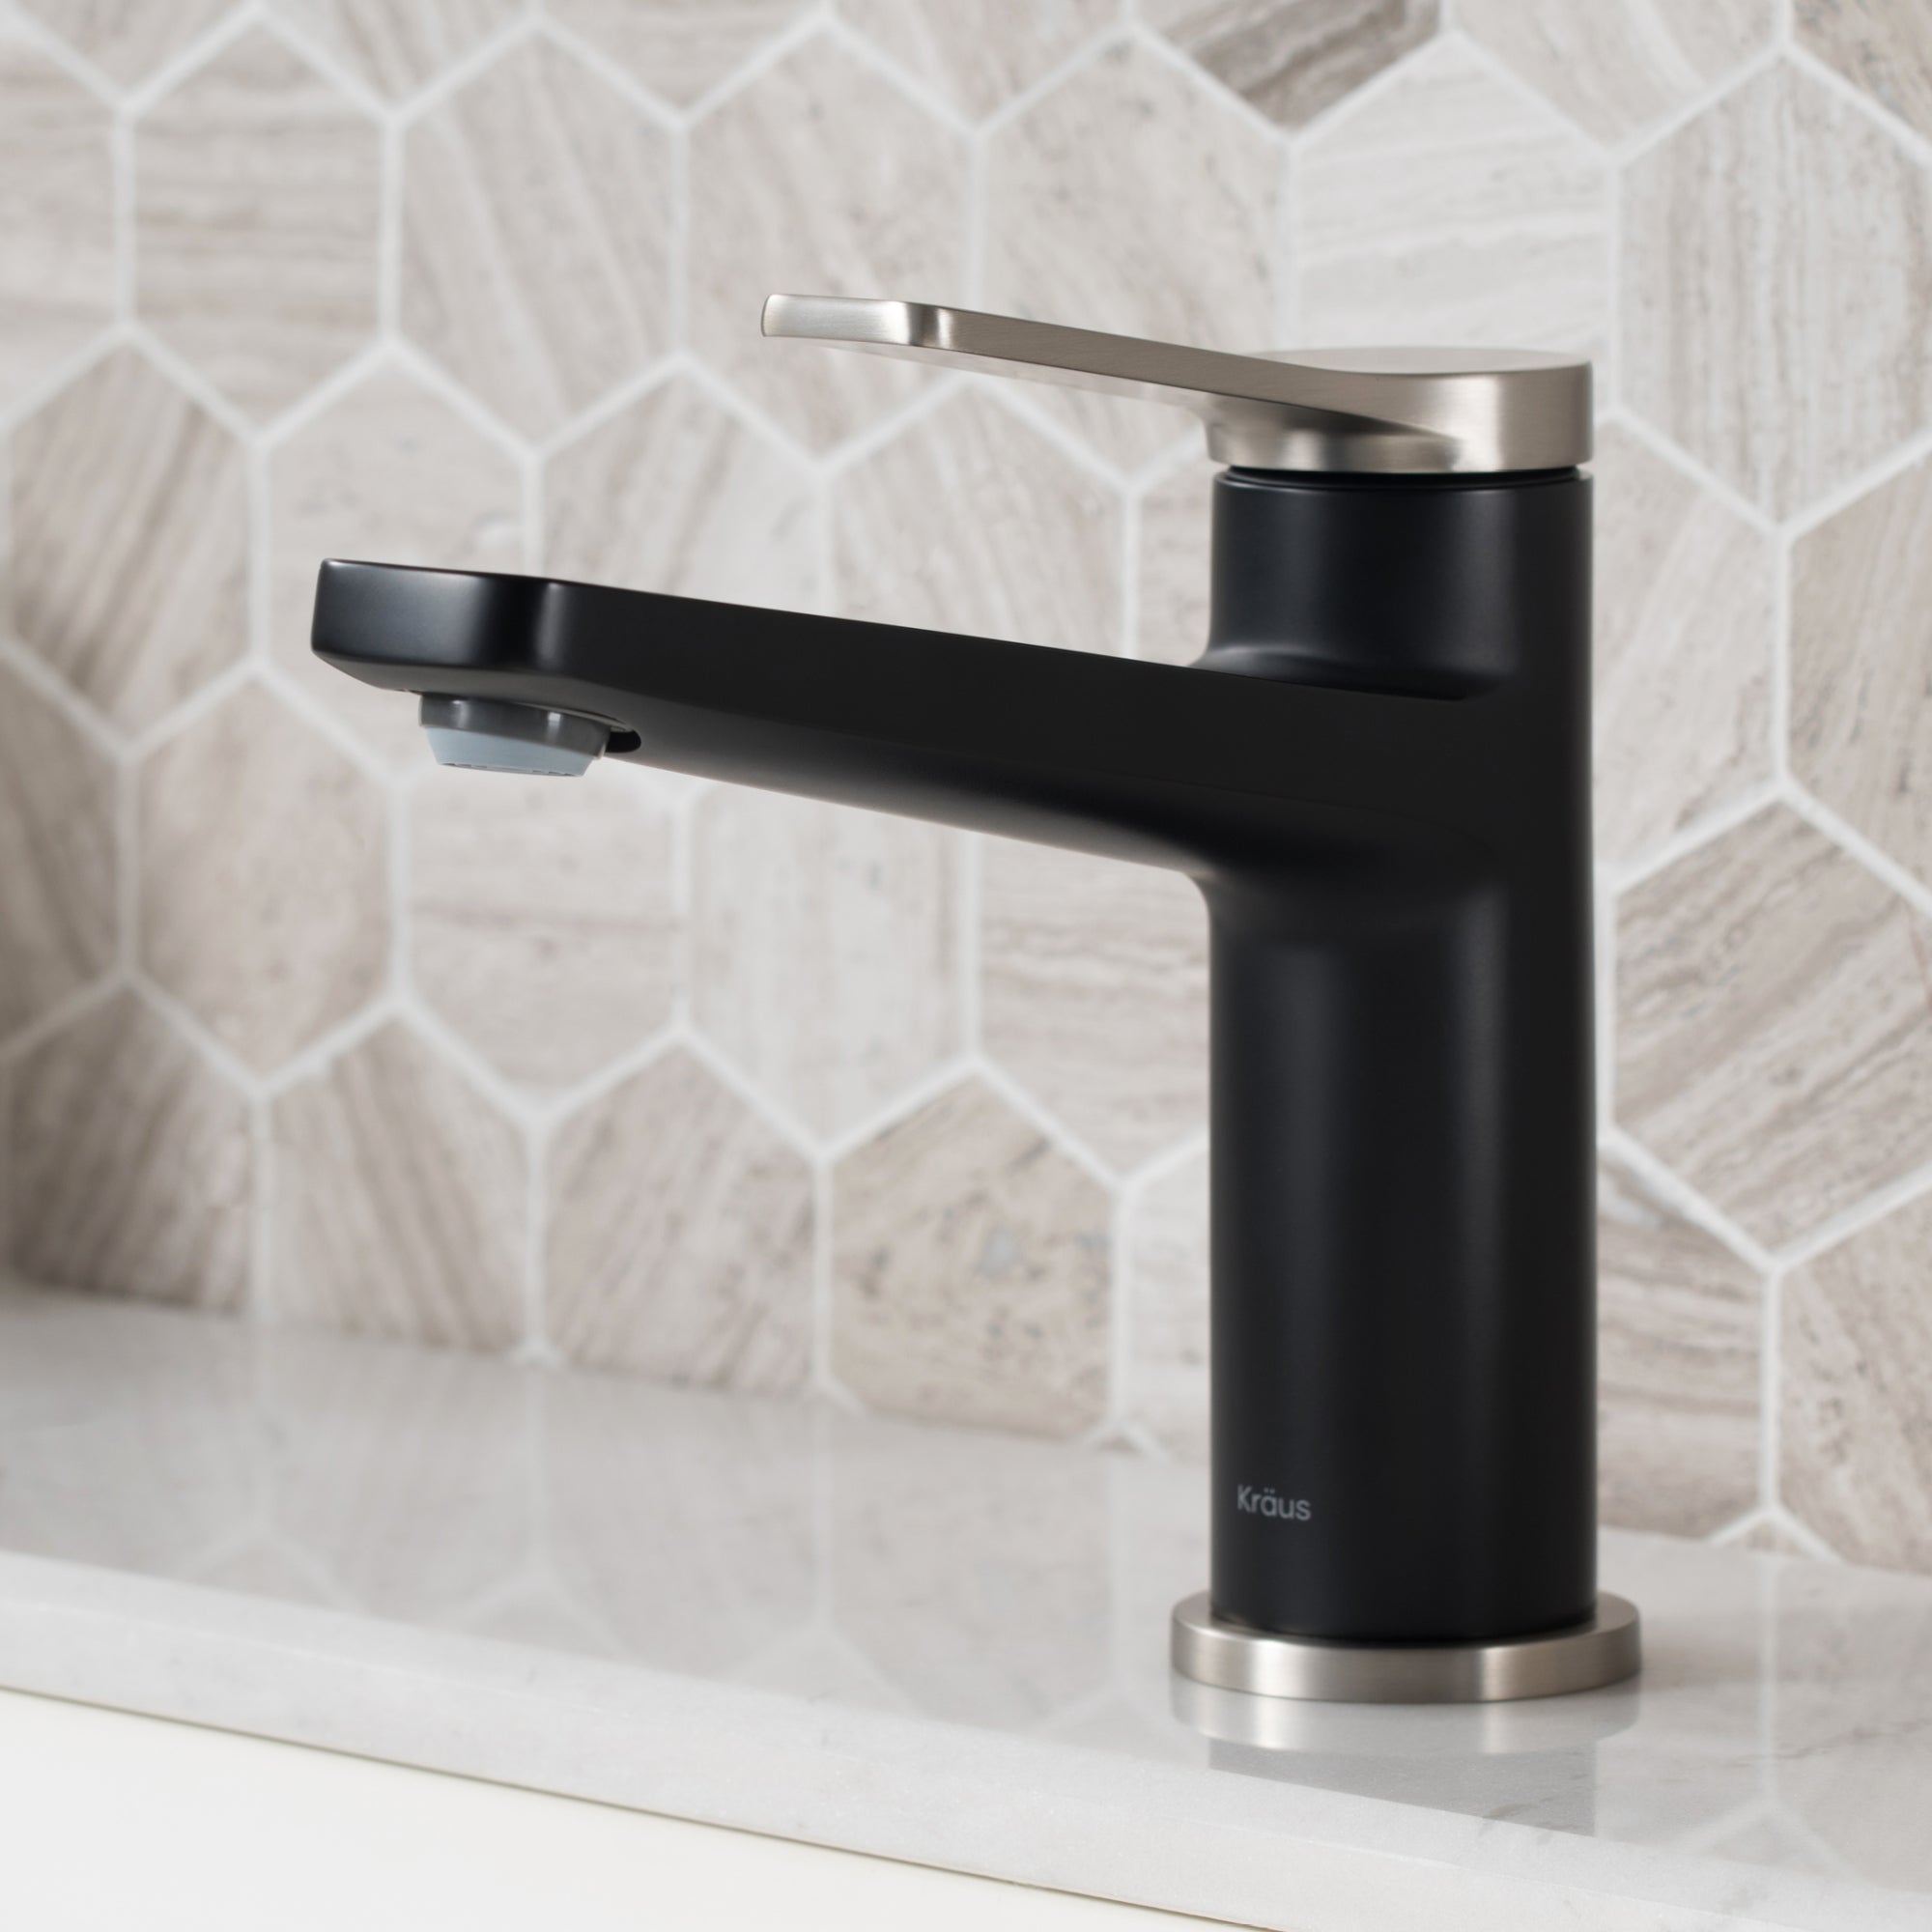 KRAUS Indy Single Handle Bathroom Faucet in Spot Free Stainless Steel/Matte Black